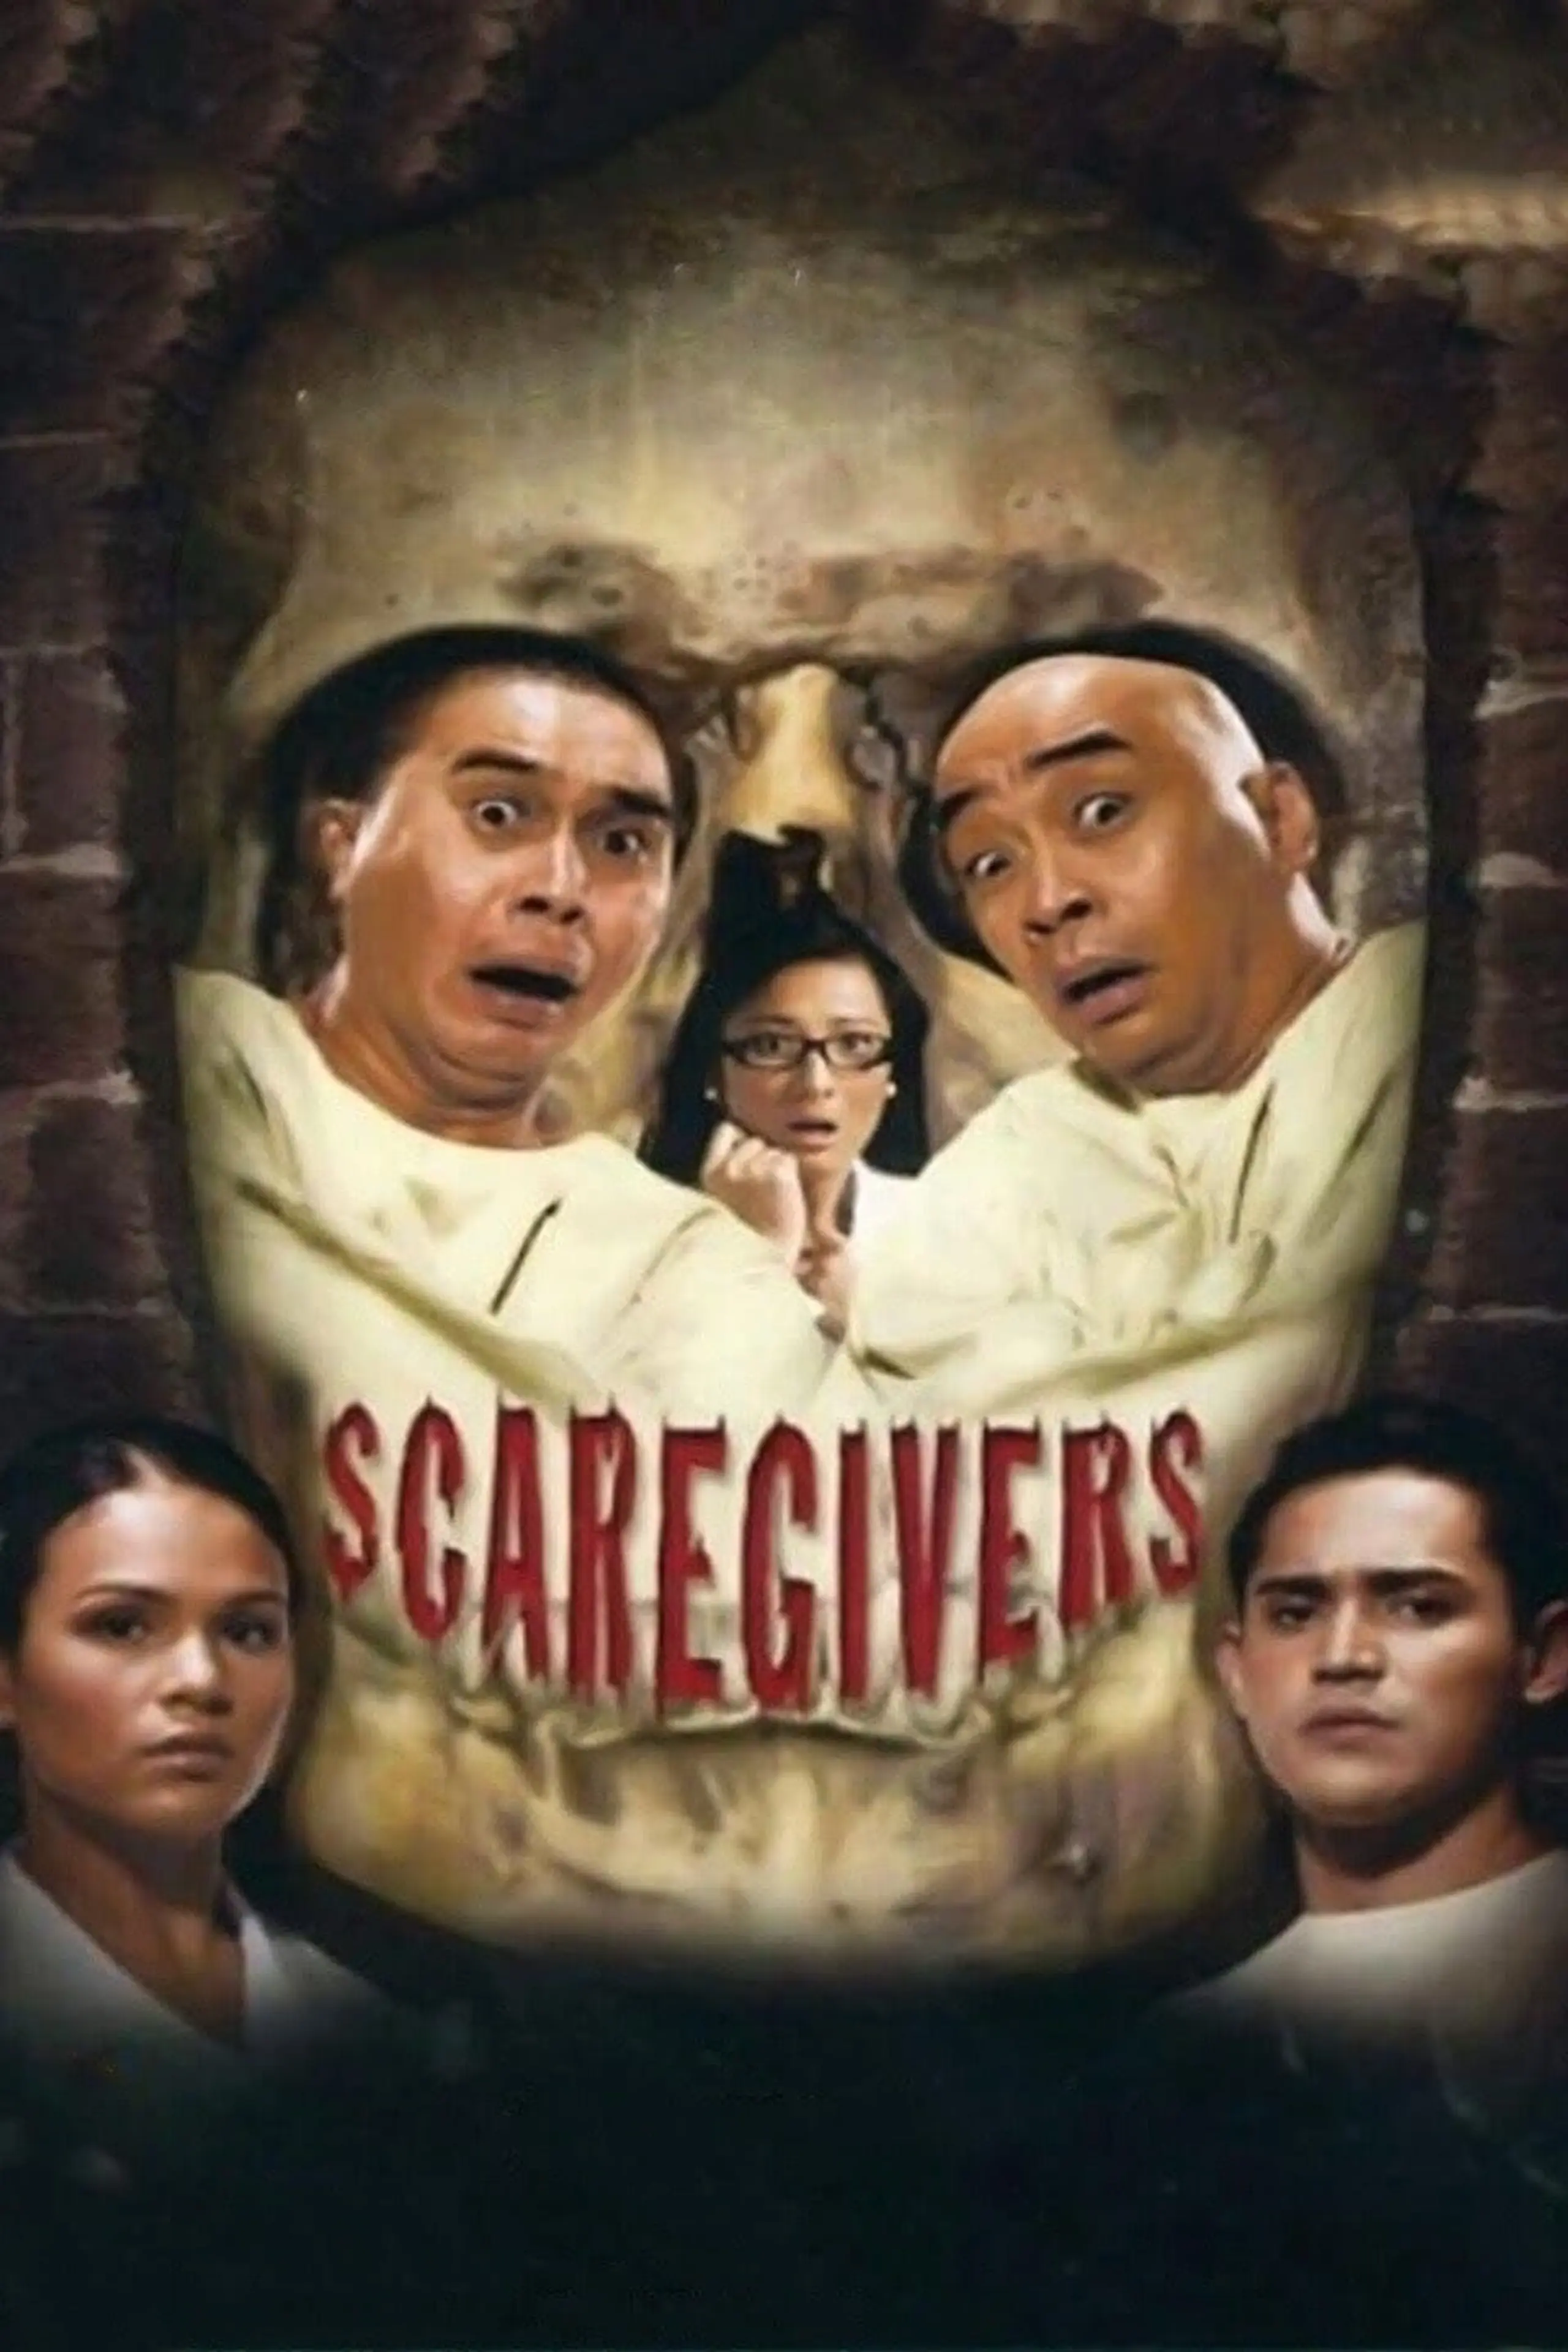 Scaregivers